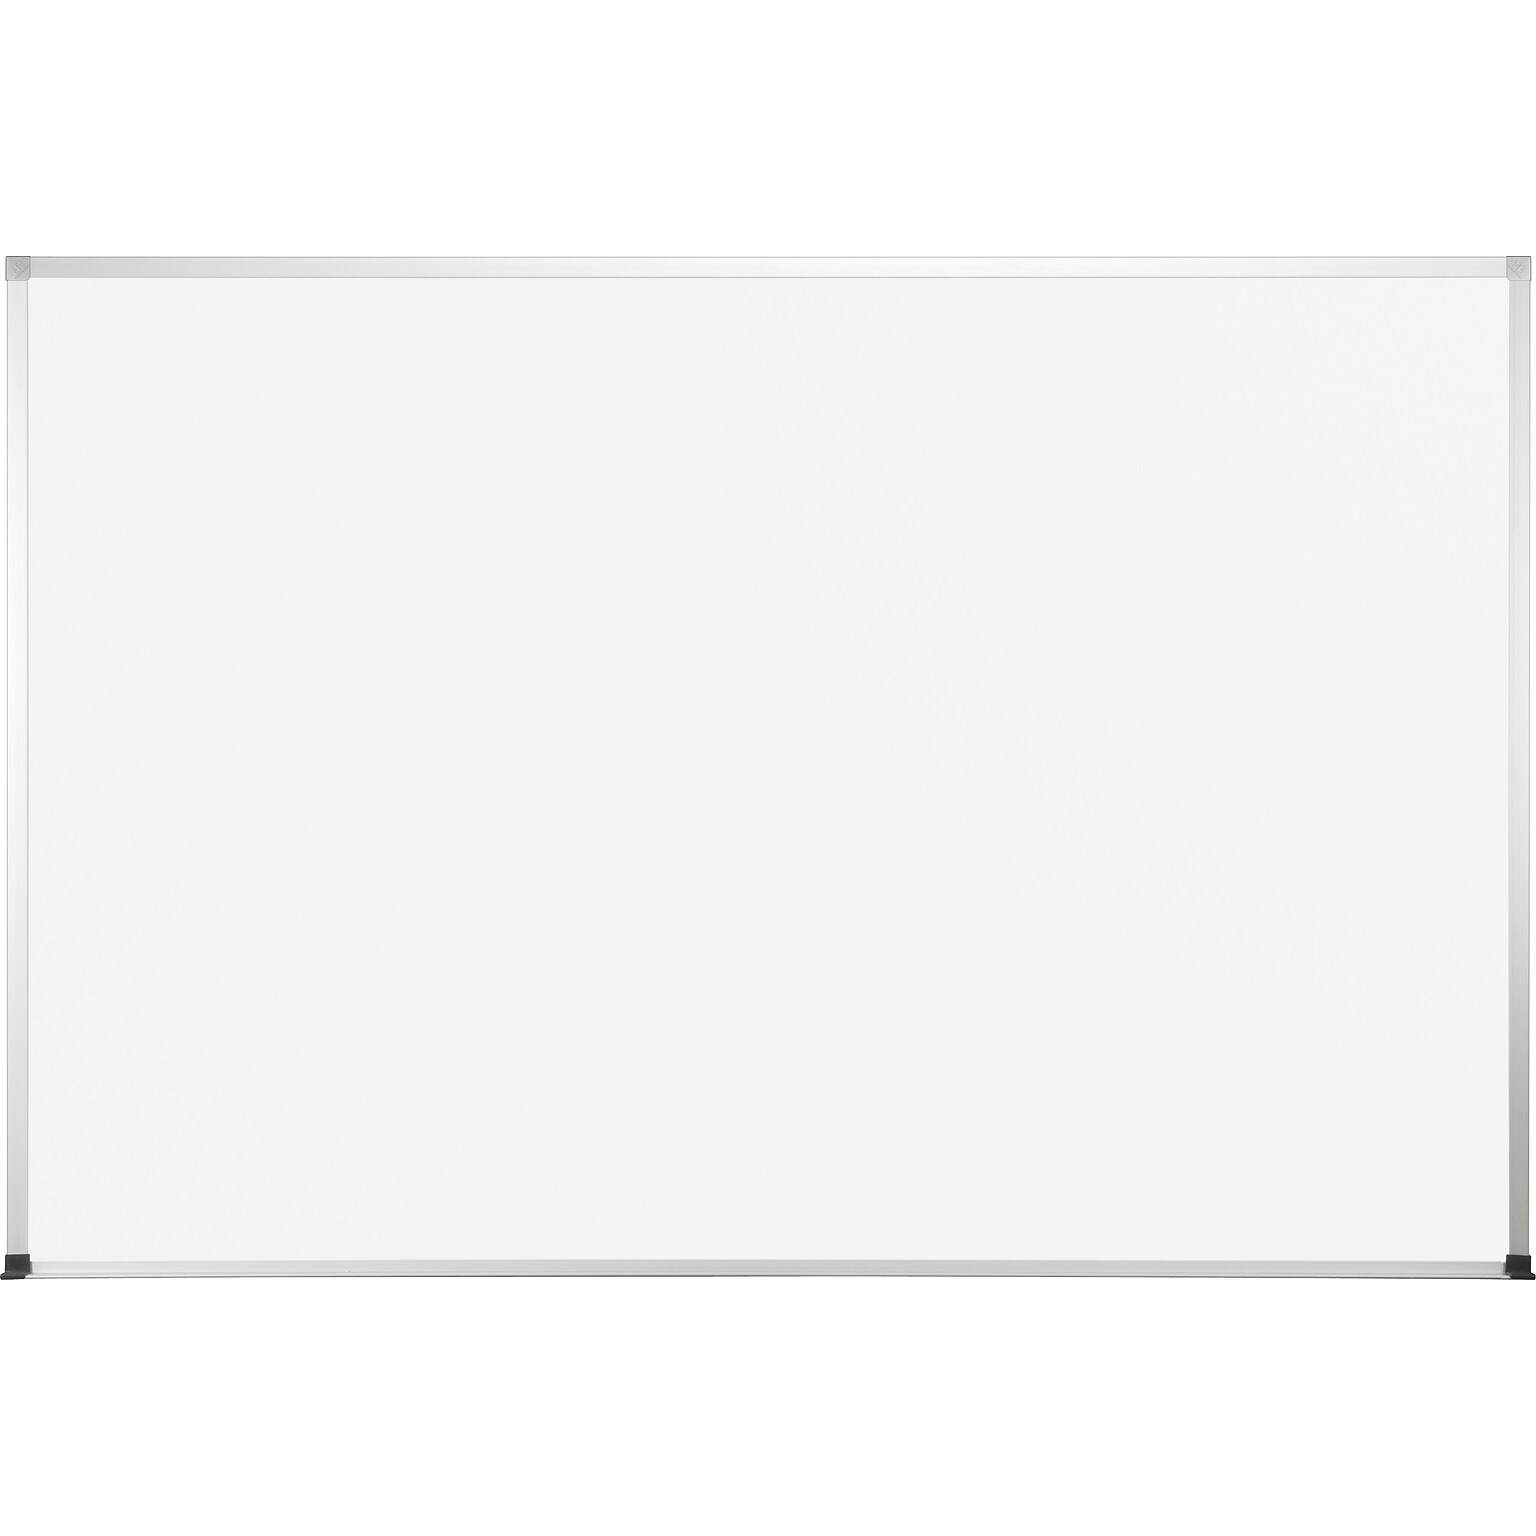 Best-Rite® Dura-Rite Dry-Erase Board with Aluminum Frame, 2x3